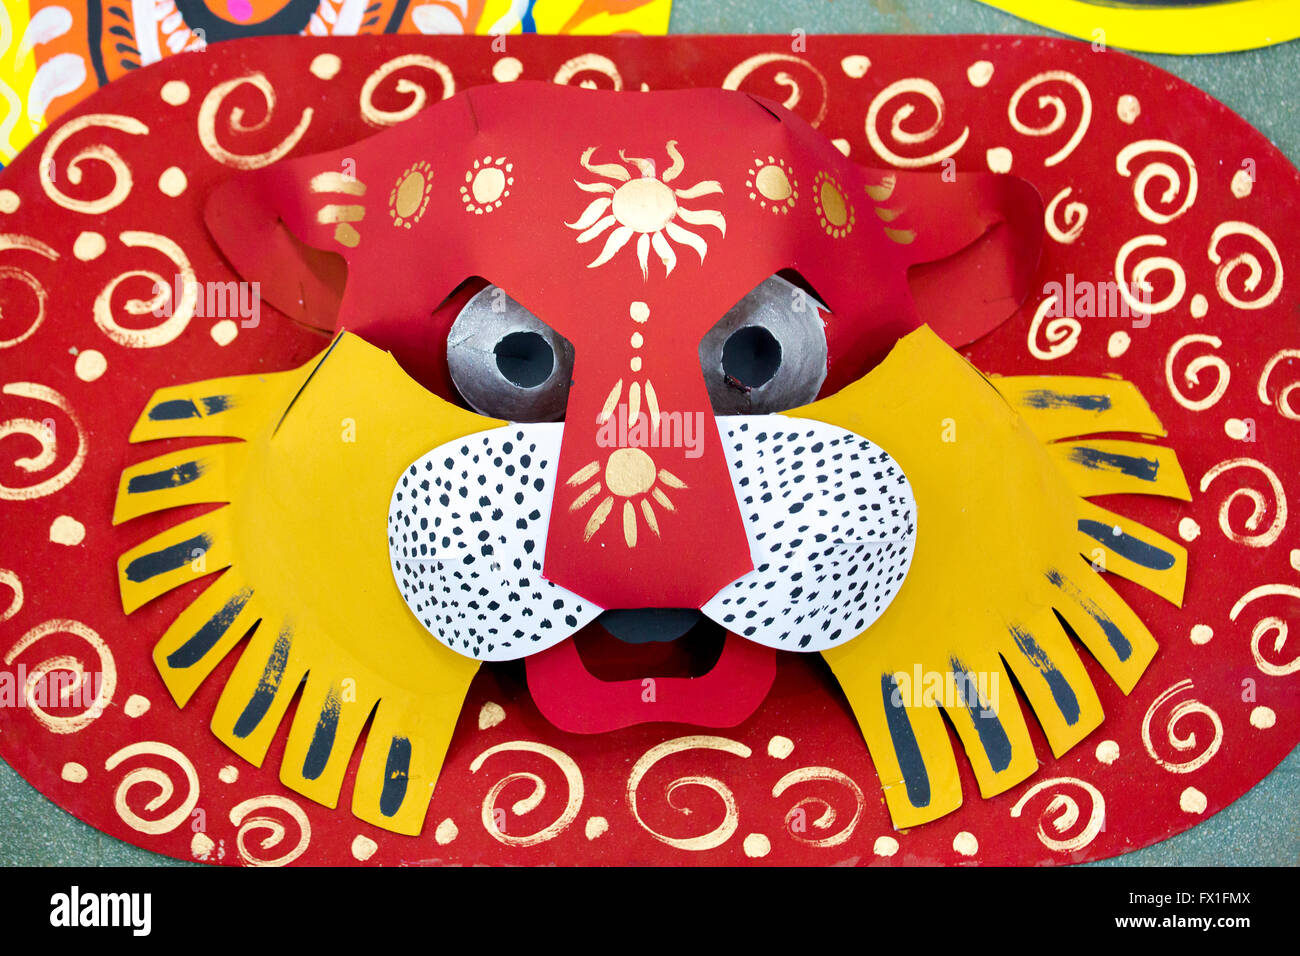 Tiger mask © Jahangir Alam Onuchcha/ Alamy Stock Photo - Alamy